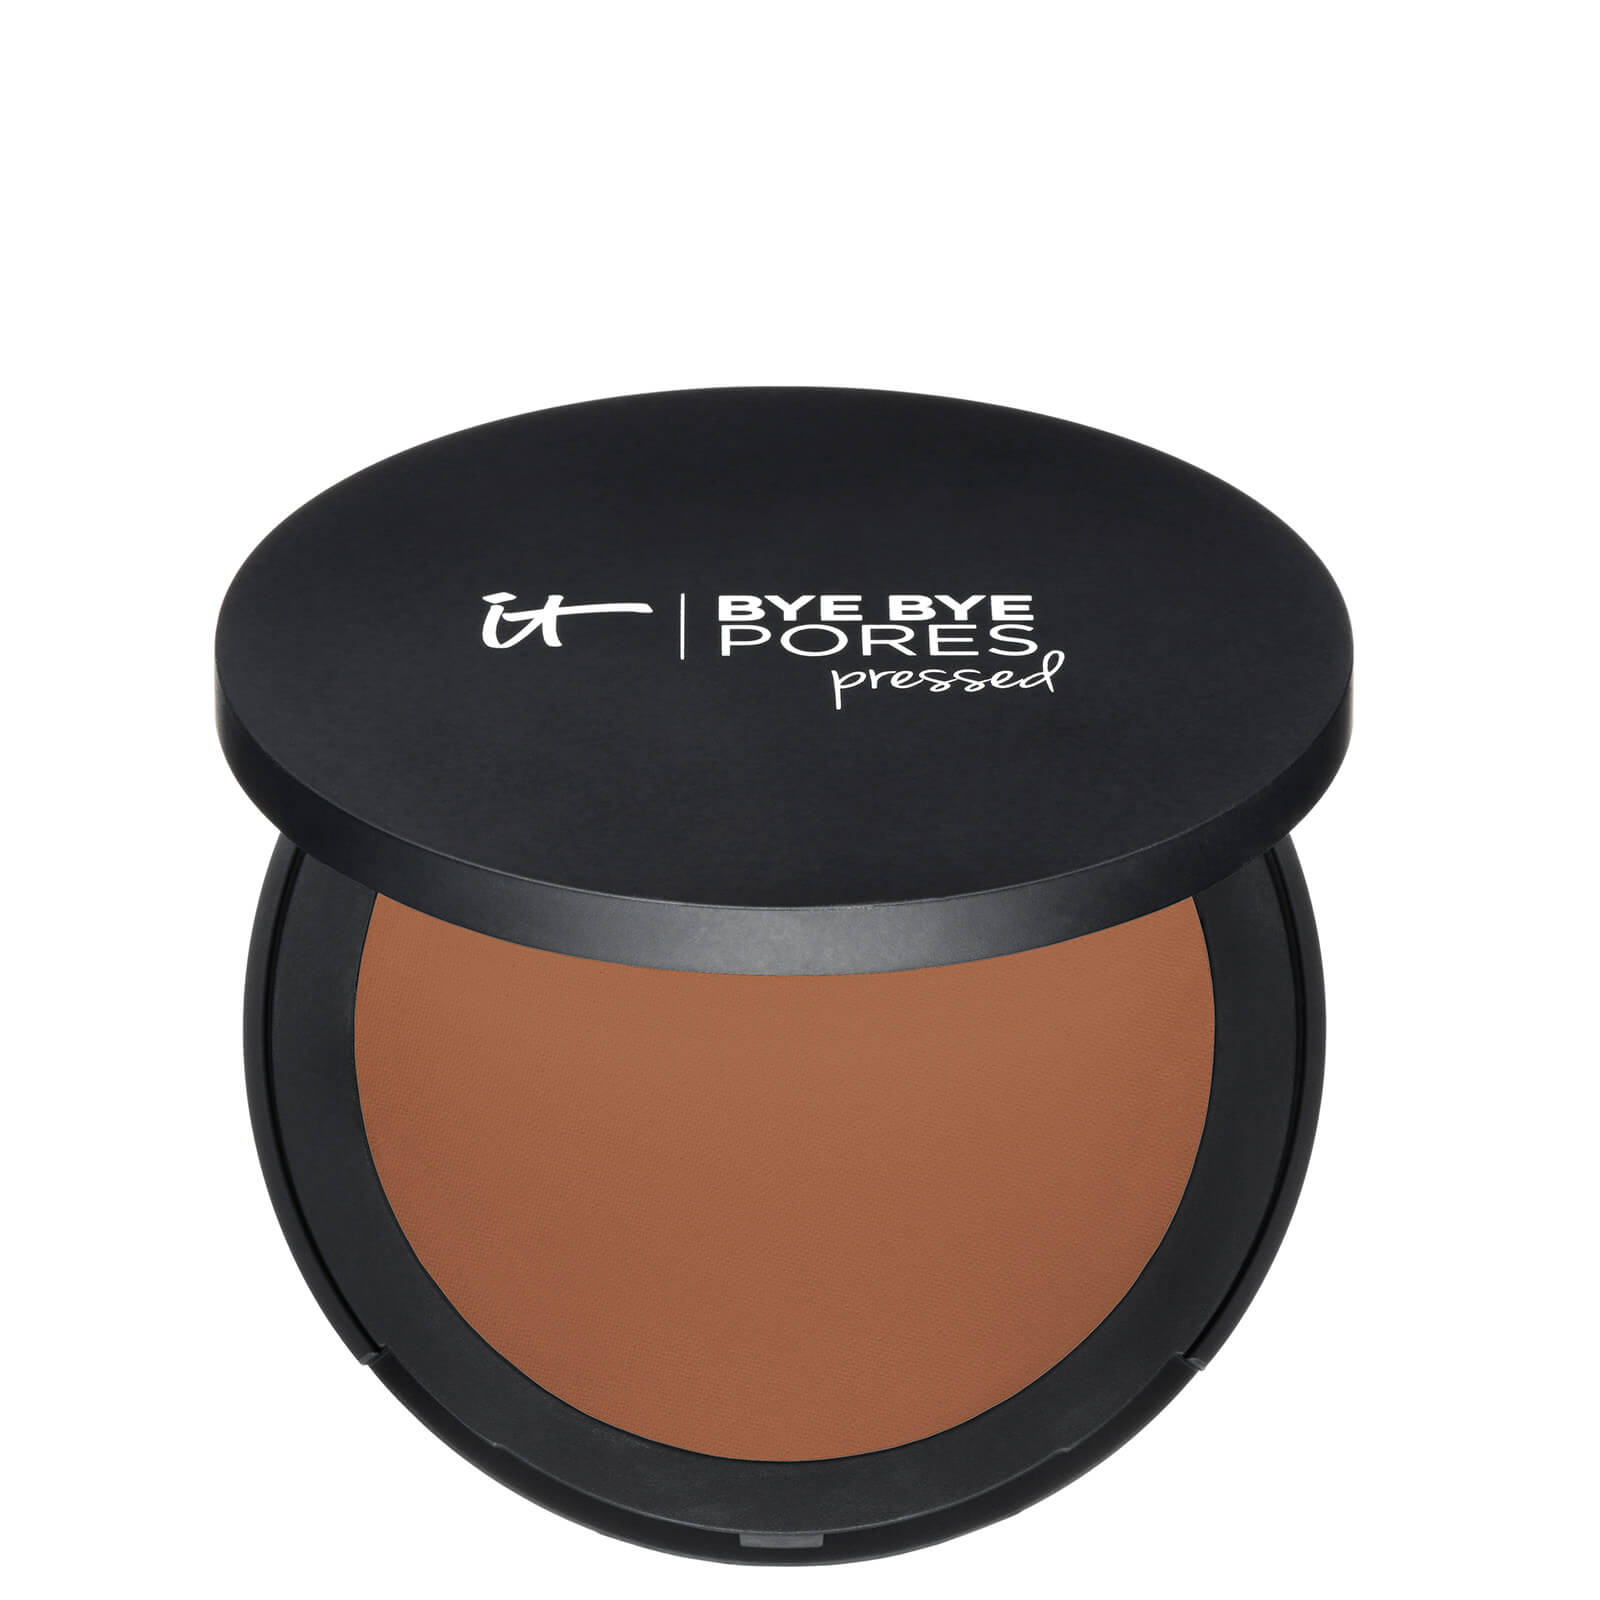 IT Cosmetics Bye Bye Pores Pressed Translucent Powder 9g (Various Shades) - Rich Deep